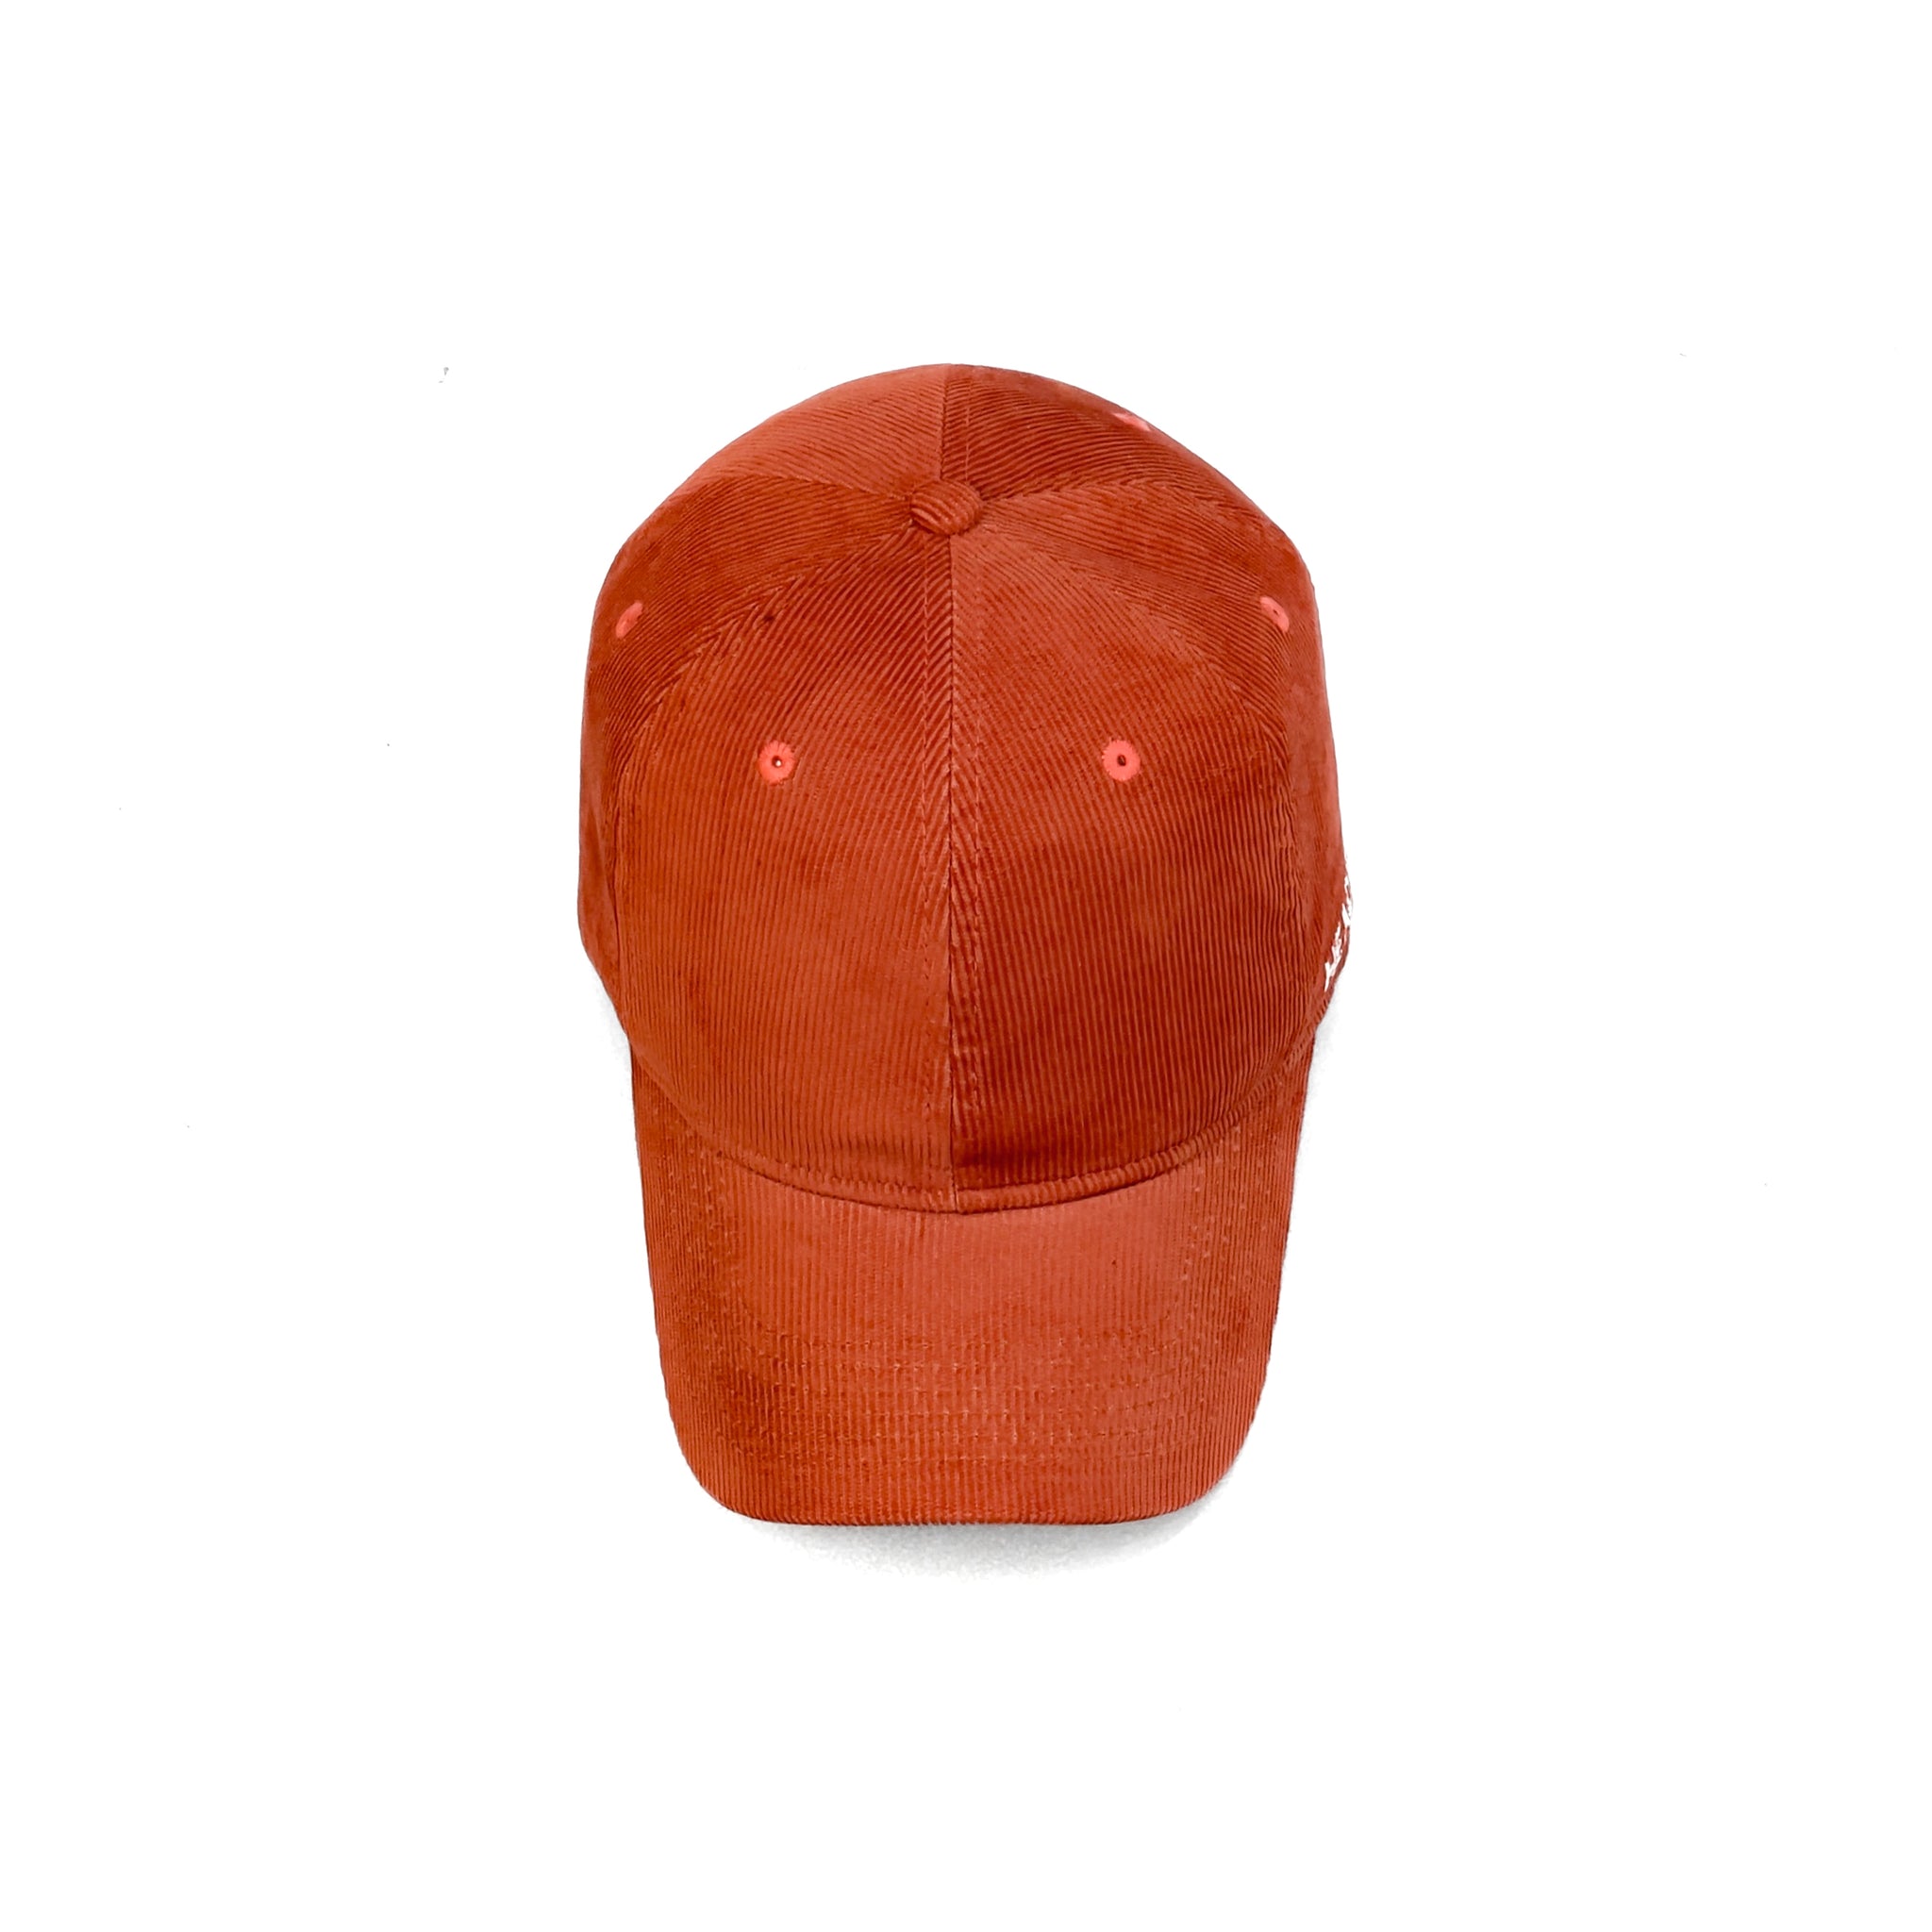 HEAD GEAR ORANGE CORDUROY CAP